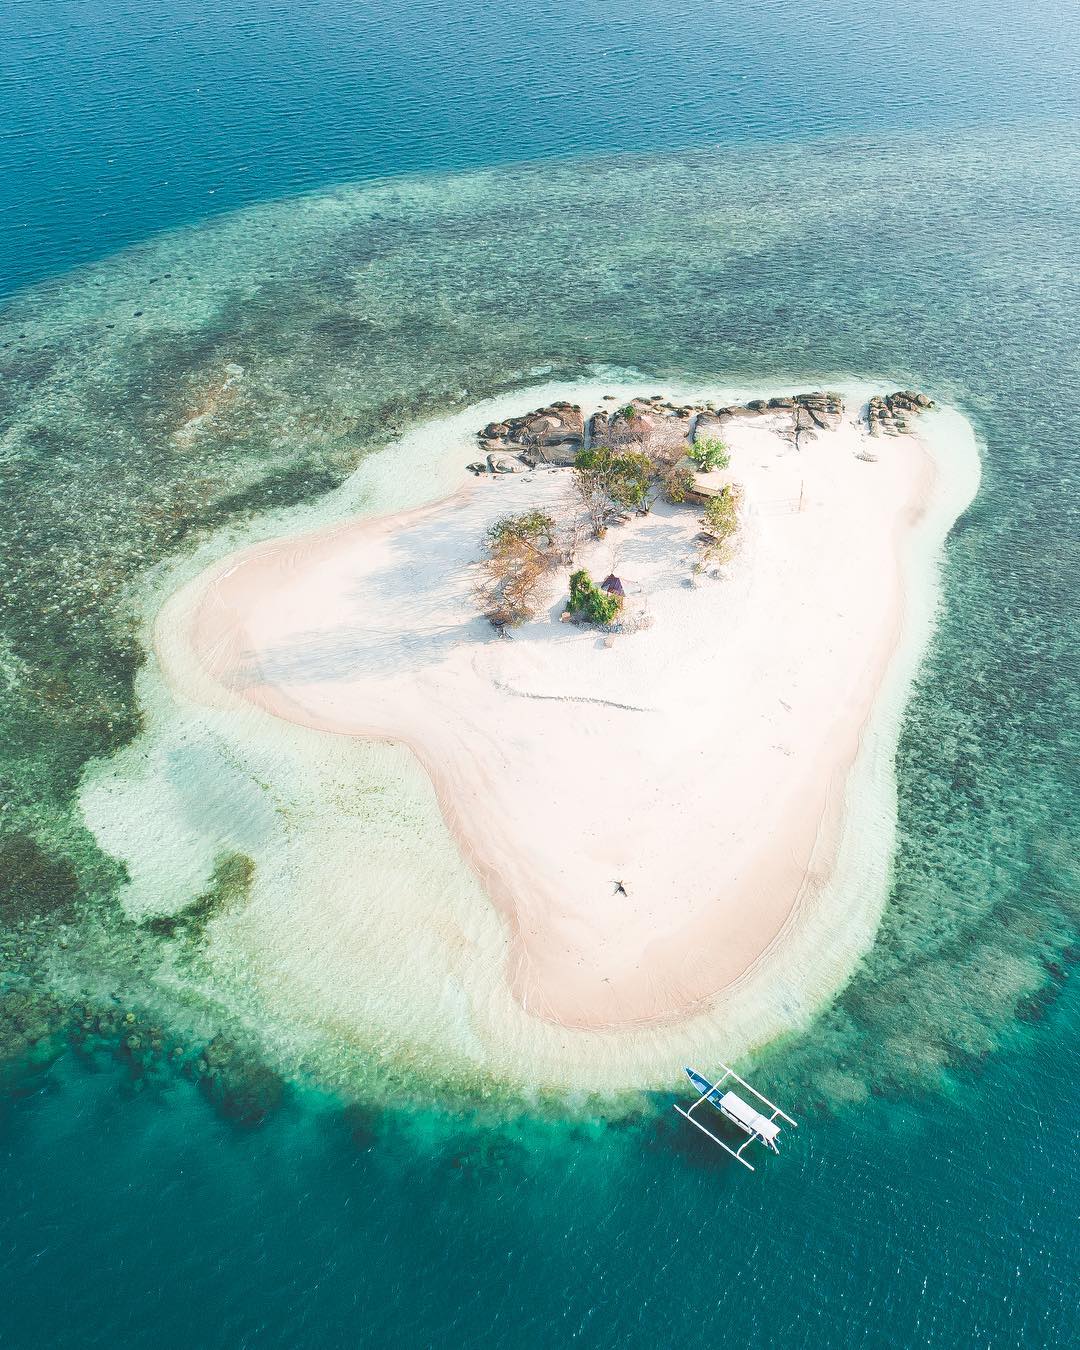 Objek wisata pantai pulau lombok barat yang banyak dikunjungi kecuali